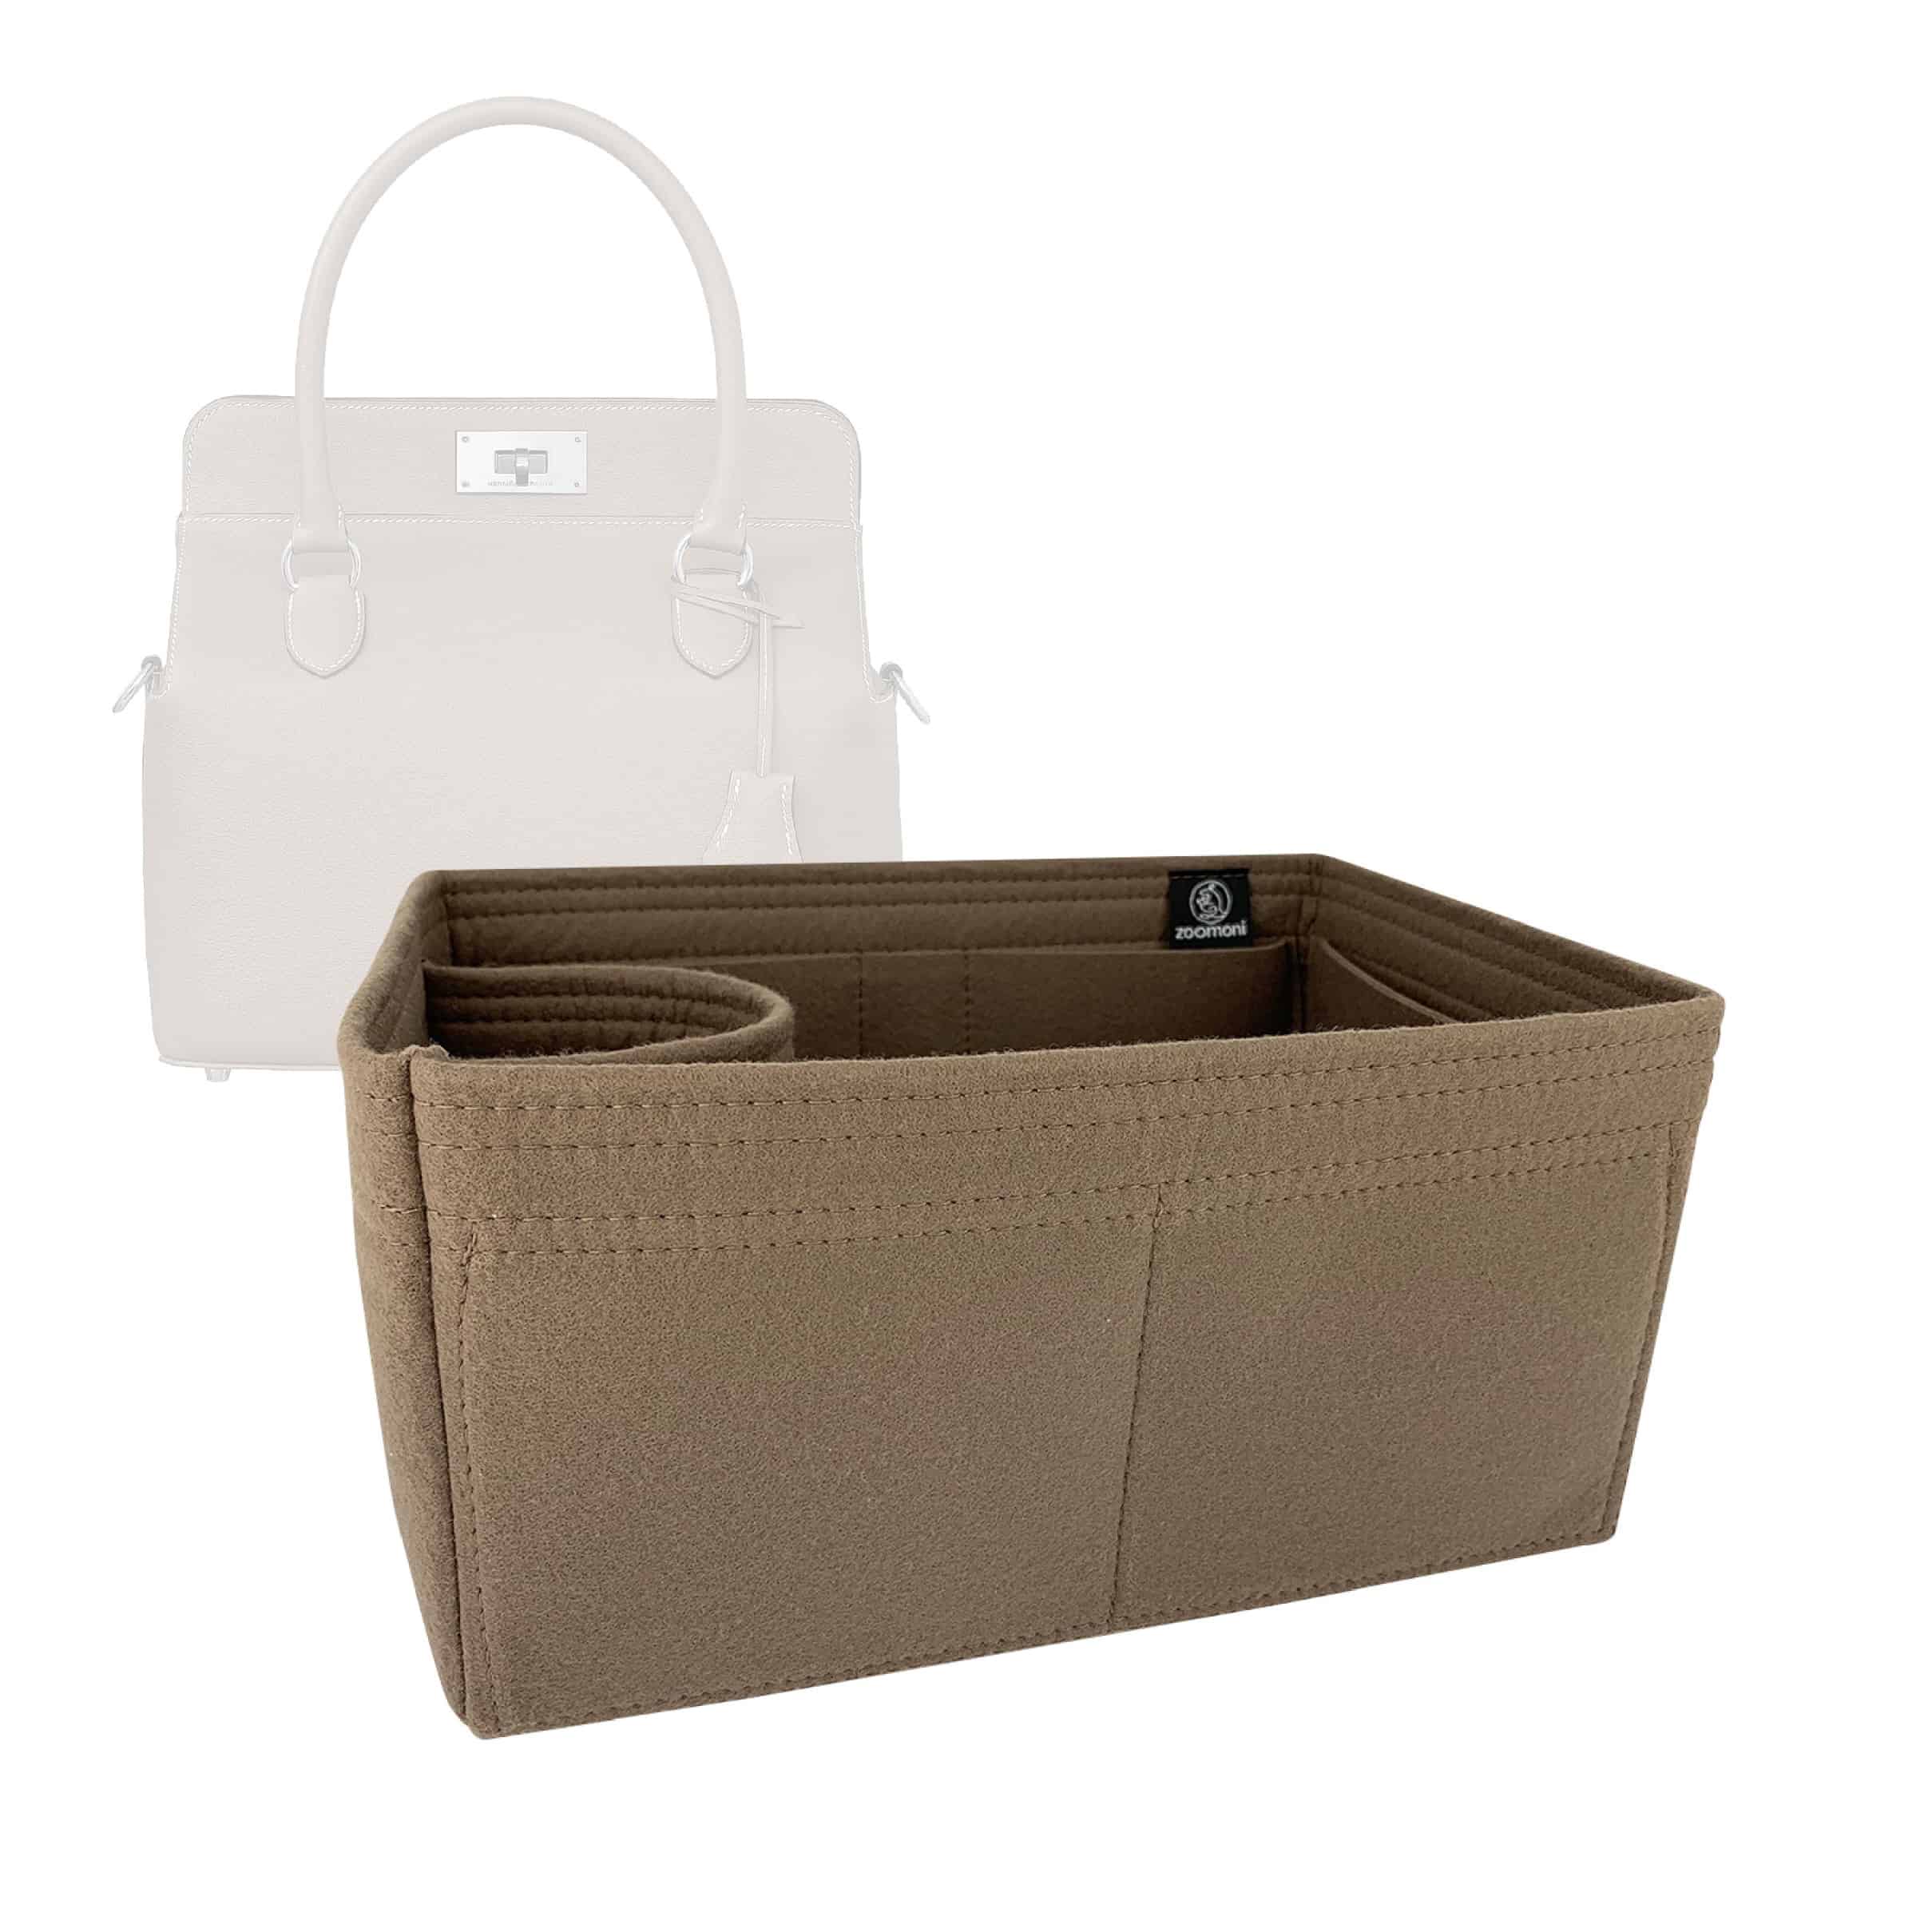 Hermes Toolbox Bag Models Organizer Insert, Classic Model Bag